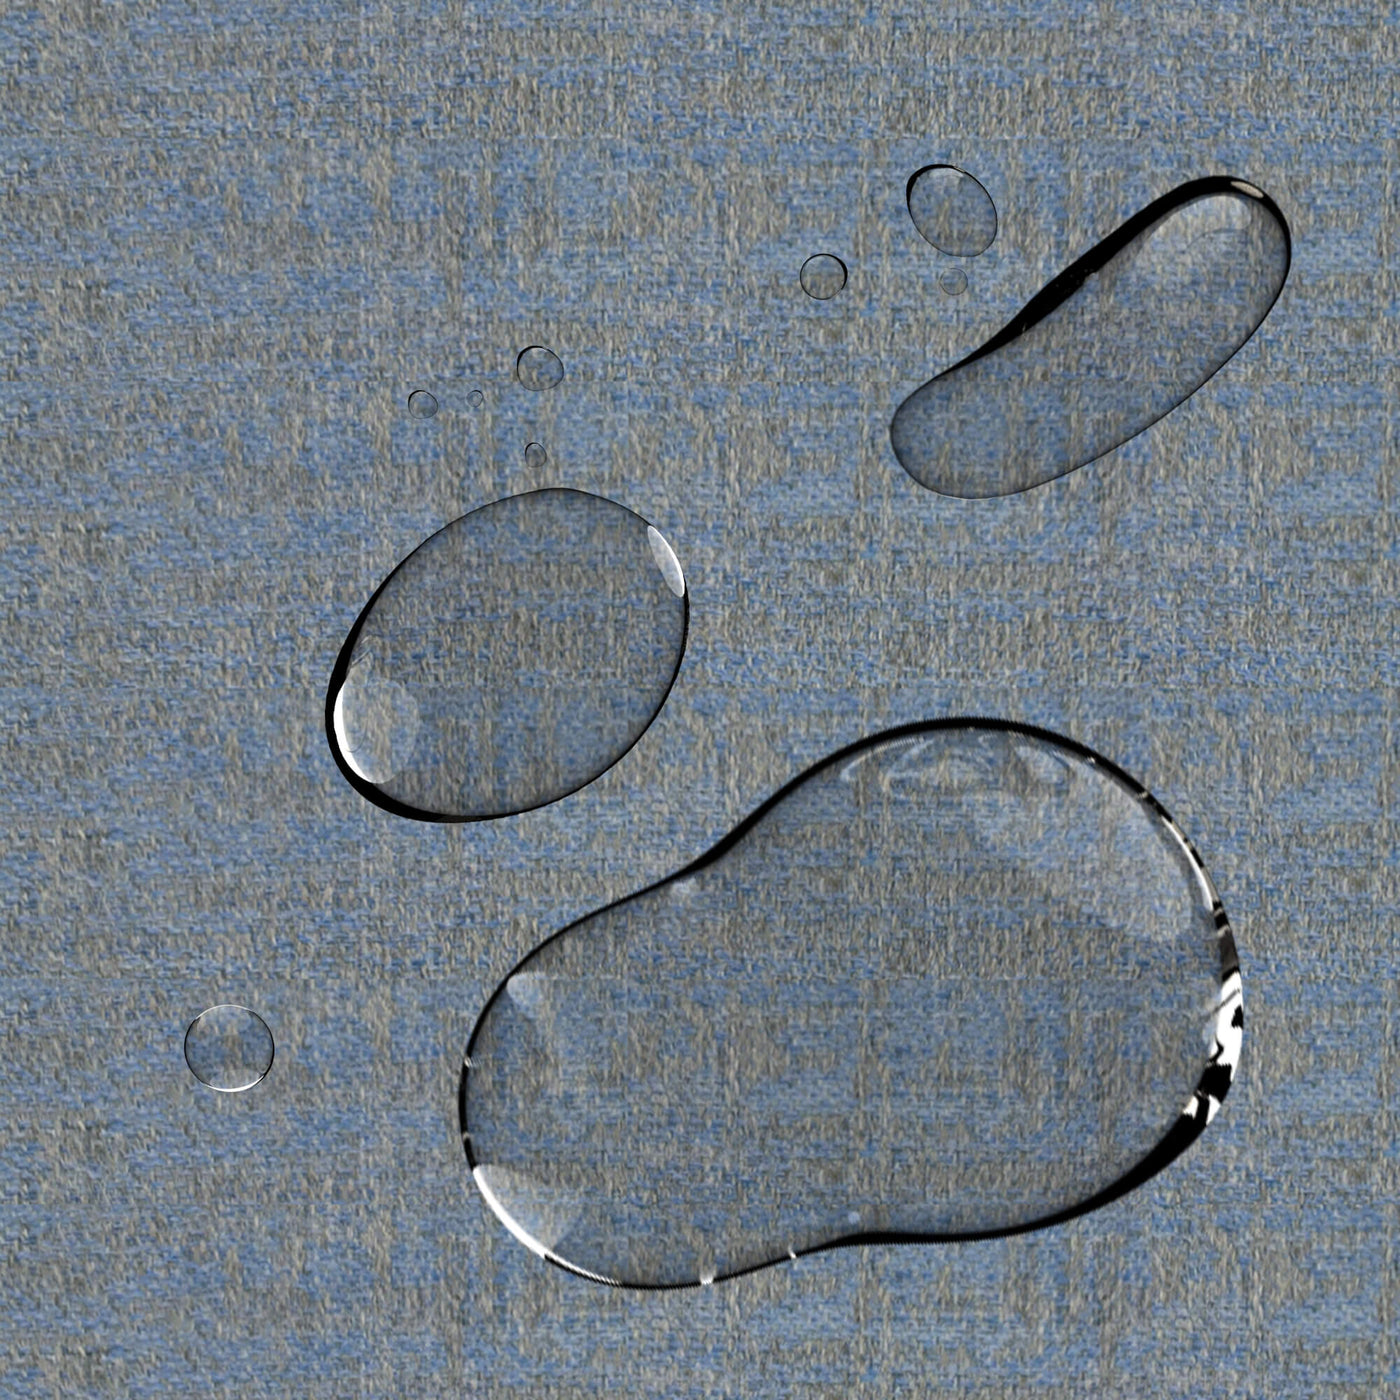 PENGI Outdoor Curtains Waterproof - Scenery Gray Blue